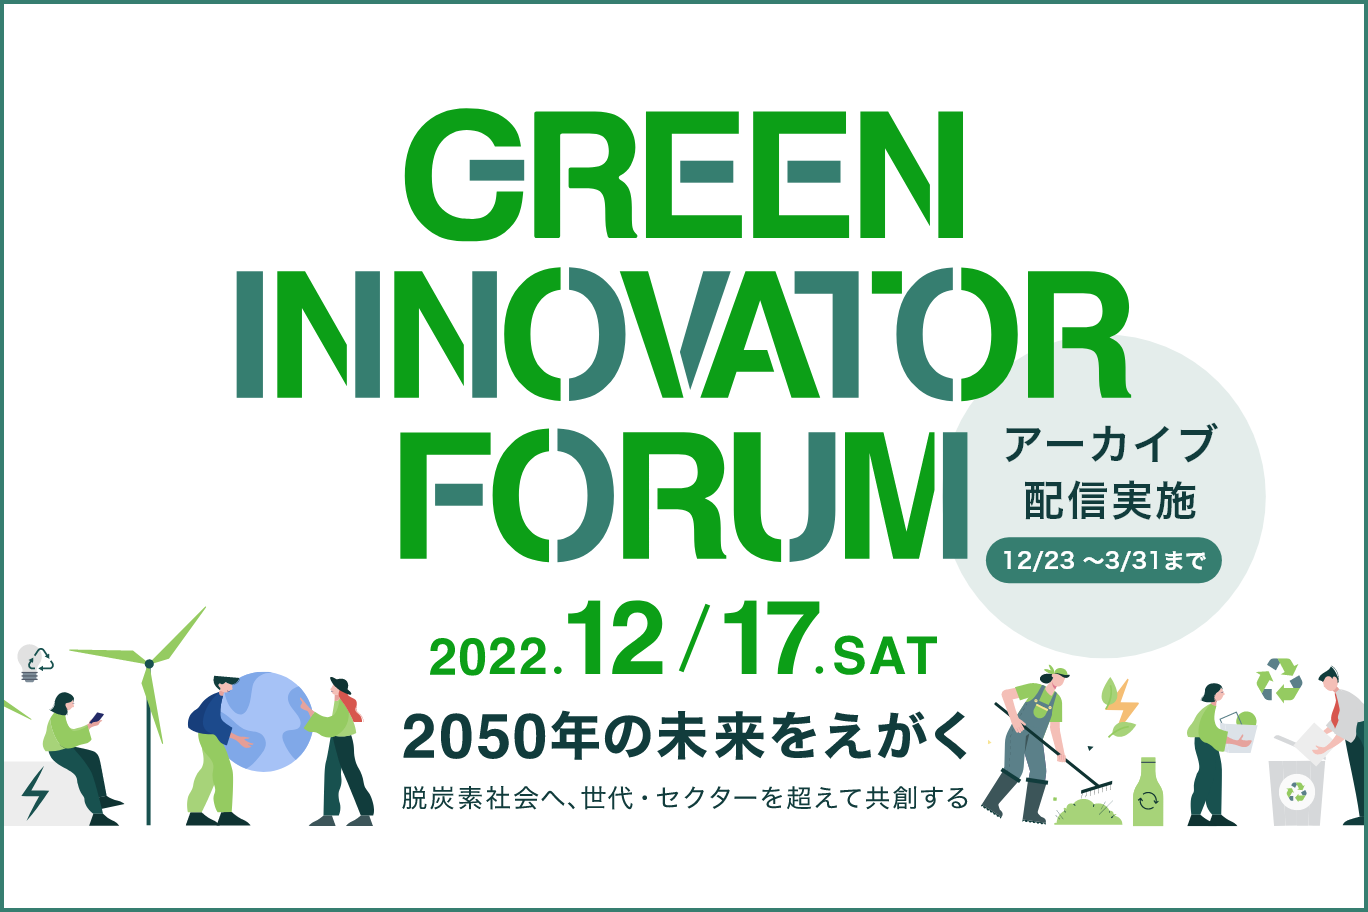 GREEN INNOVATOR FORUM 2022.12/17 SAT アーカイブ配信実施 12/23～3/31まで 2050年の未来をえがく 脱炭素社会へ、世代・セクターを超えて共創する